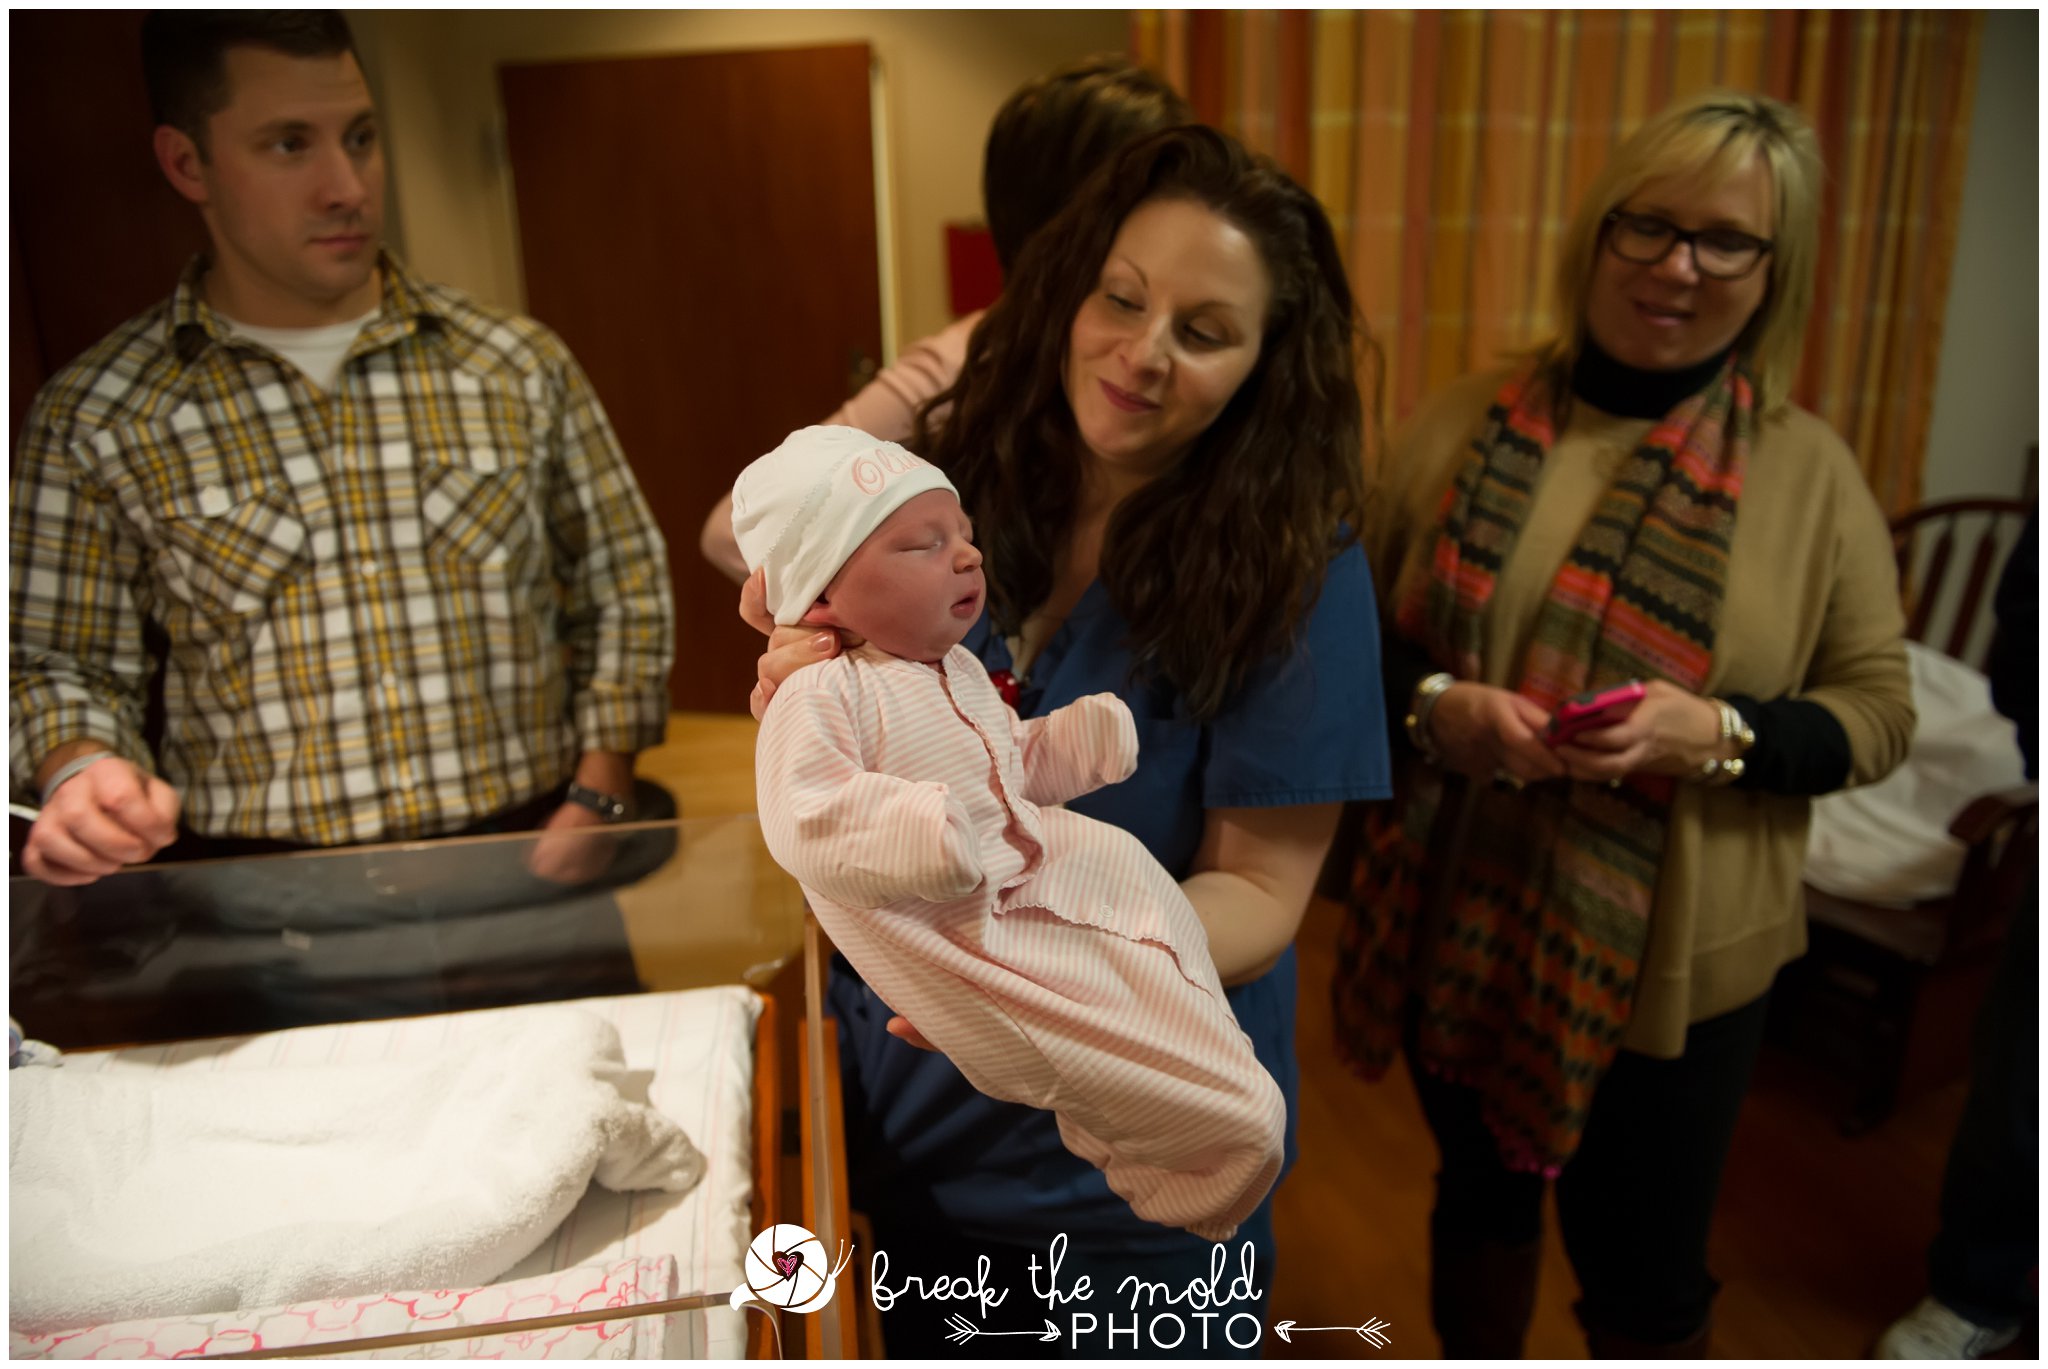 fresh-24-newborn-in-hospital-break-the-mold-photo-baby-girl-sweet-in-room-photos (14).jpg